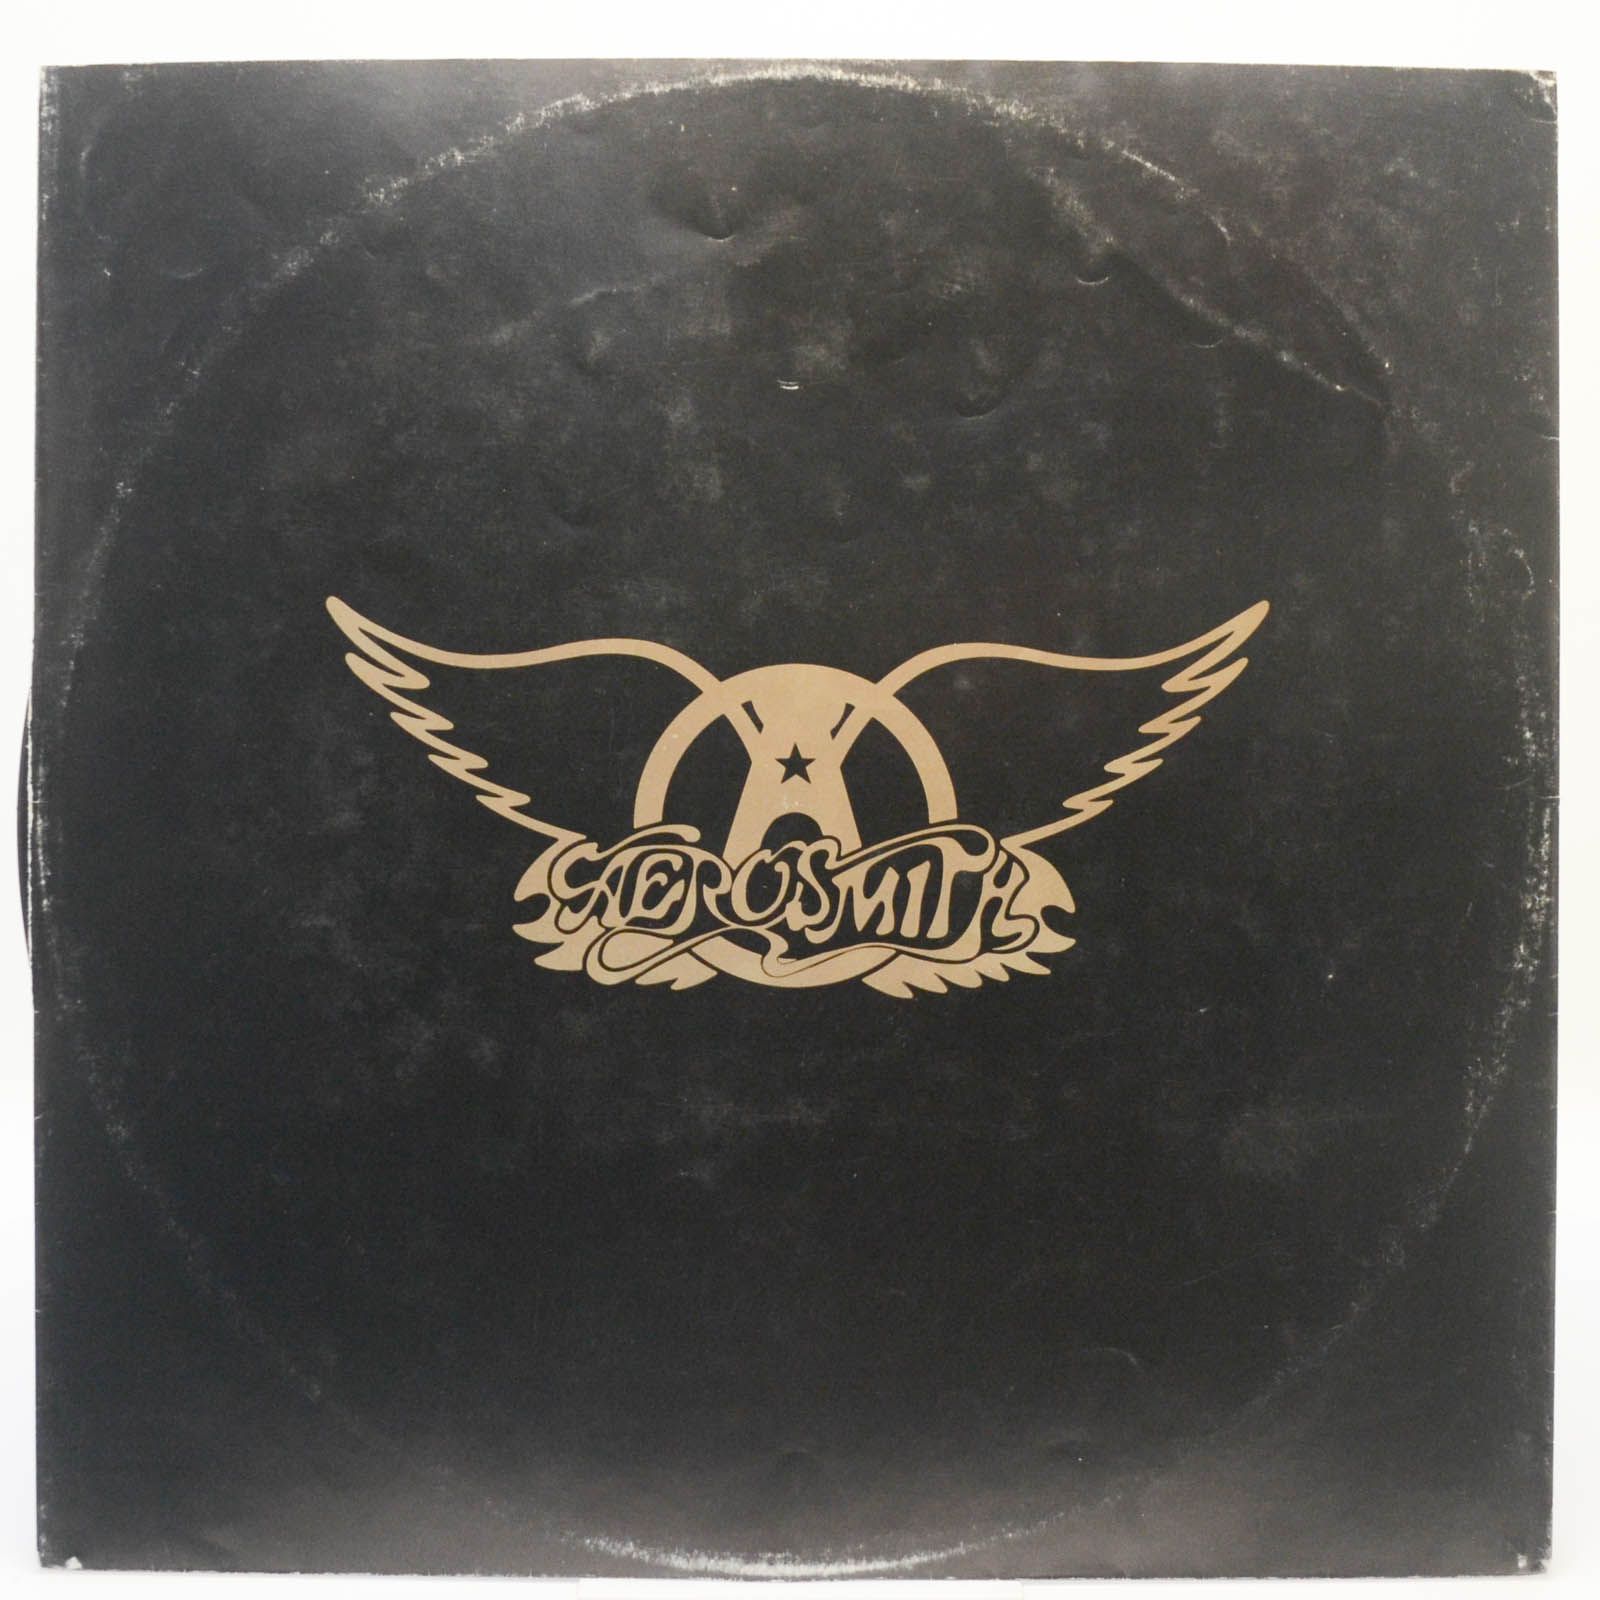 Aerosmith — Draw The Line, 1977